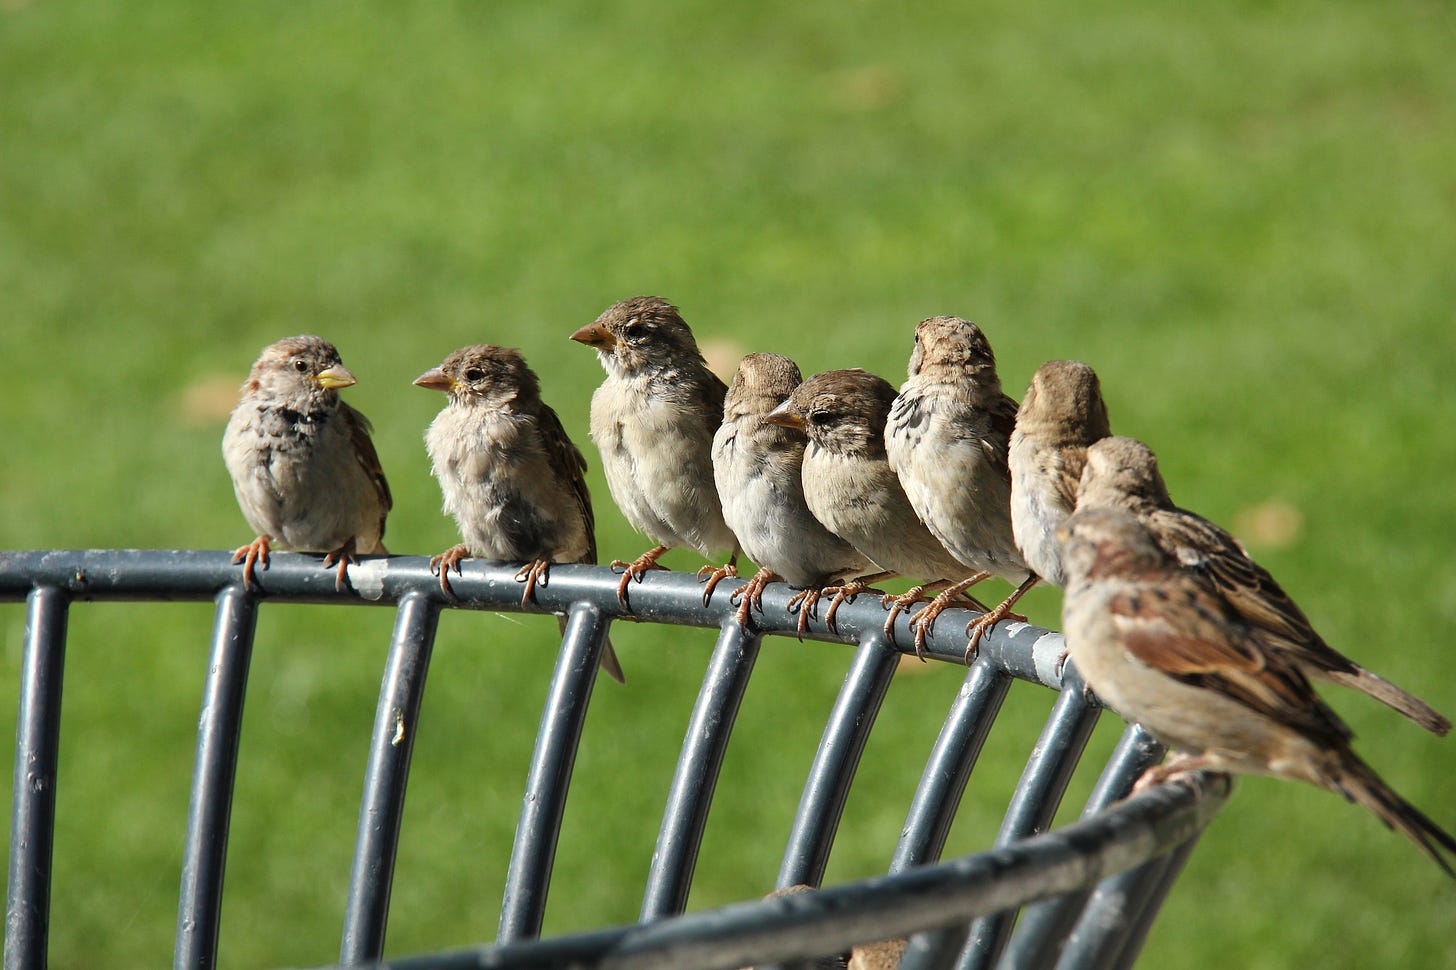 Star Park - Sparrows | Ljubljana in Spring | Pictures | Geography im ...